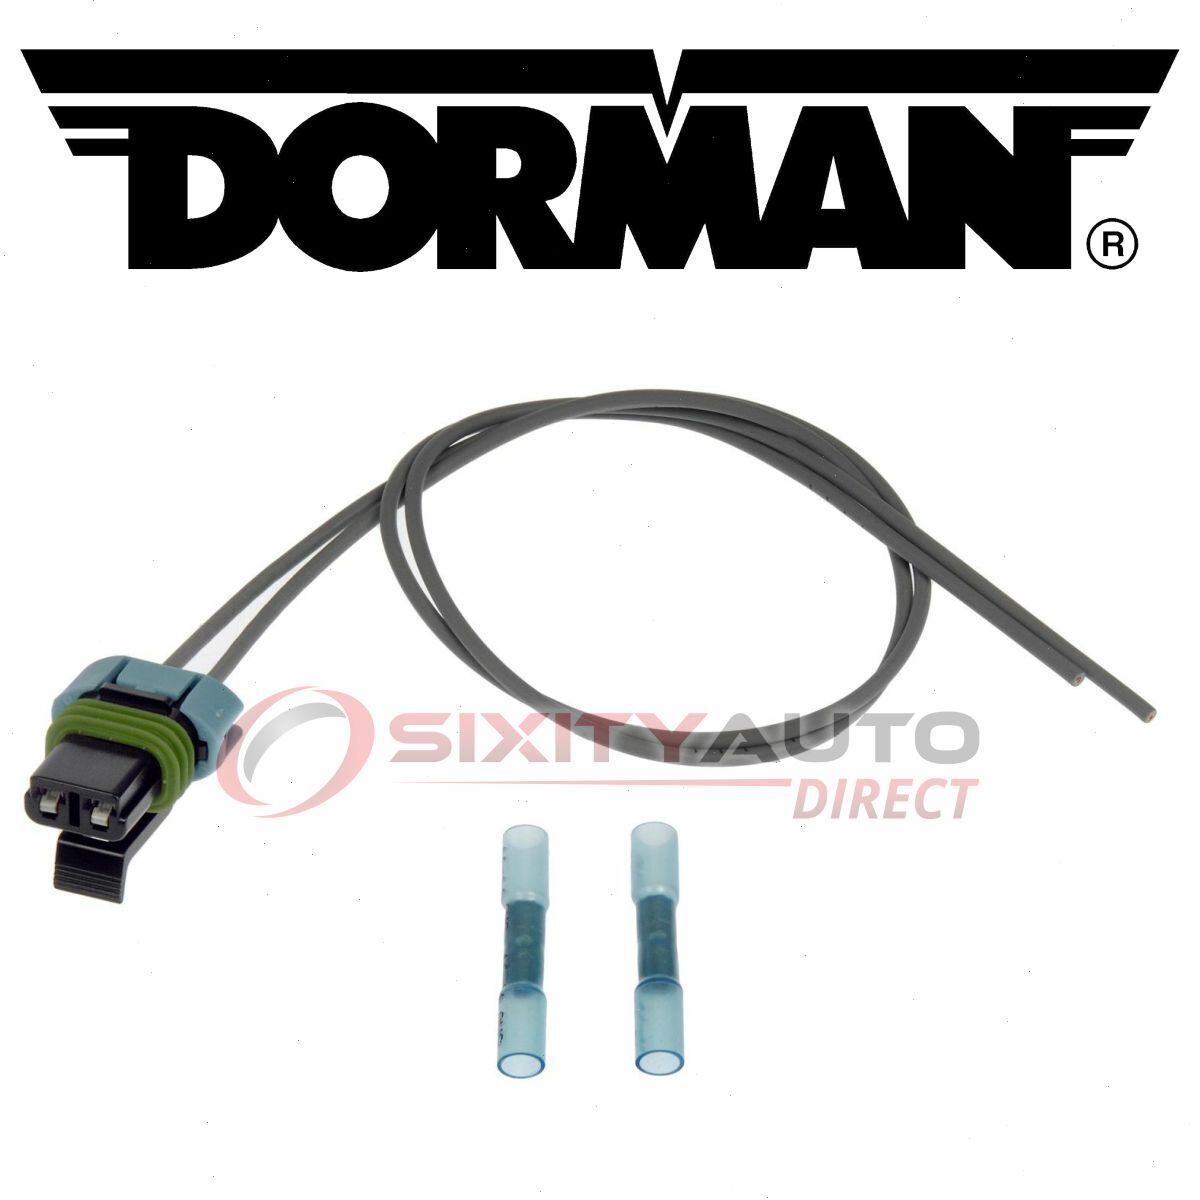 Dorman TECHoice Rear Right Door Lock Module Connector for 1977-1988 qi